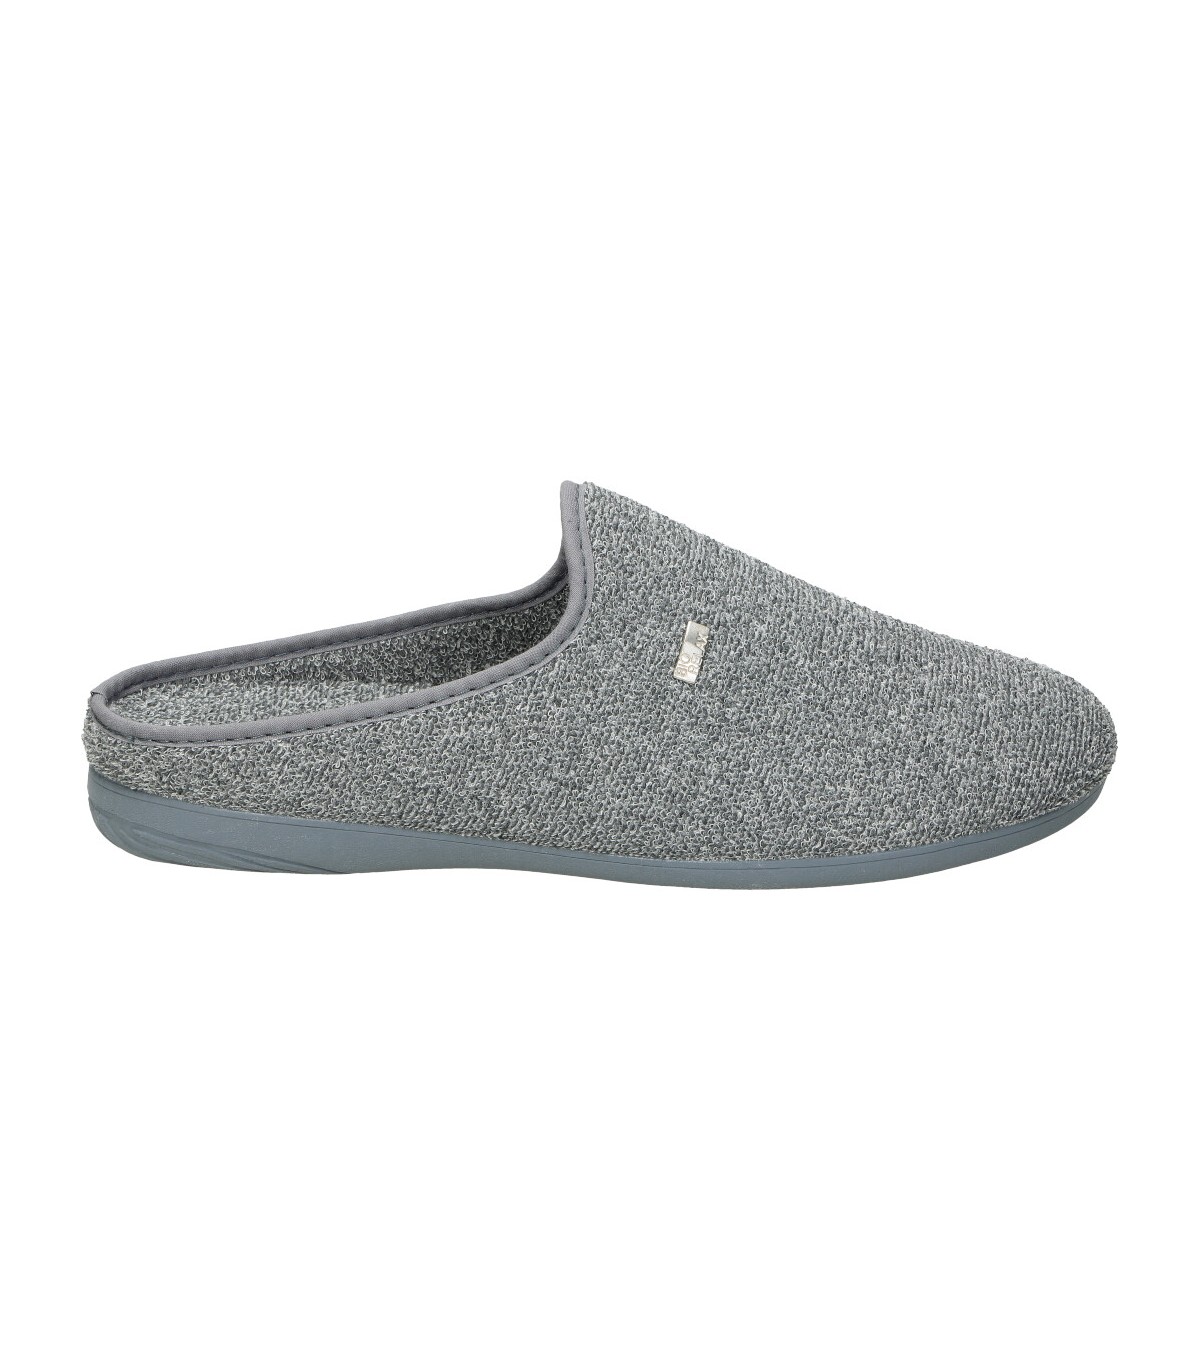 Zapatillas de casa/pantuflas para plana COSDAM 13501 en gris